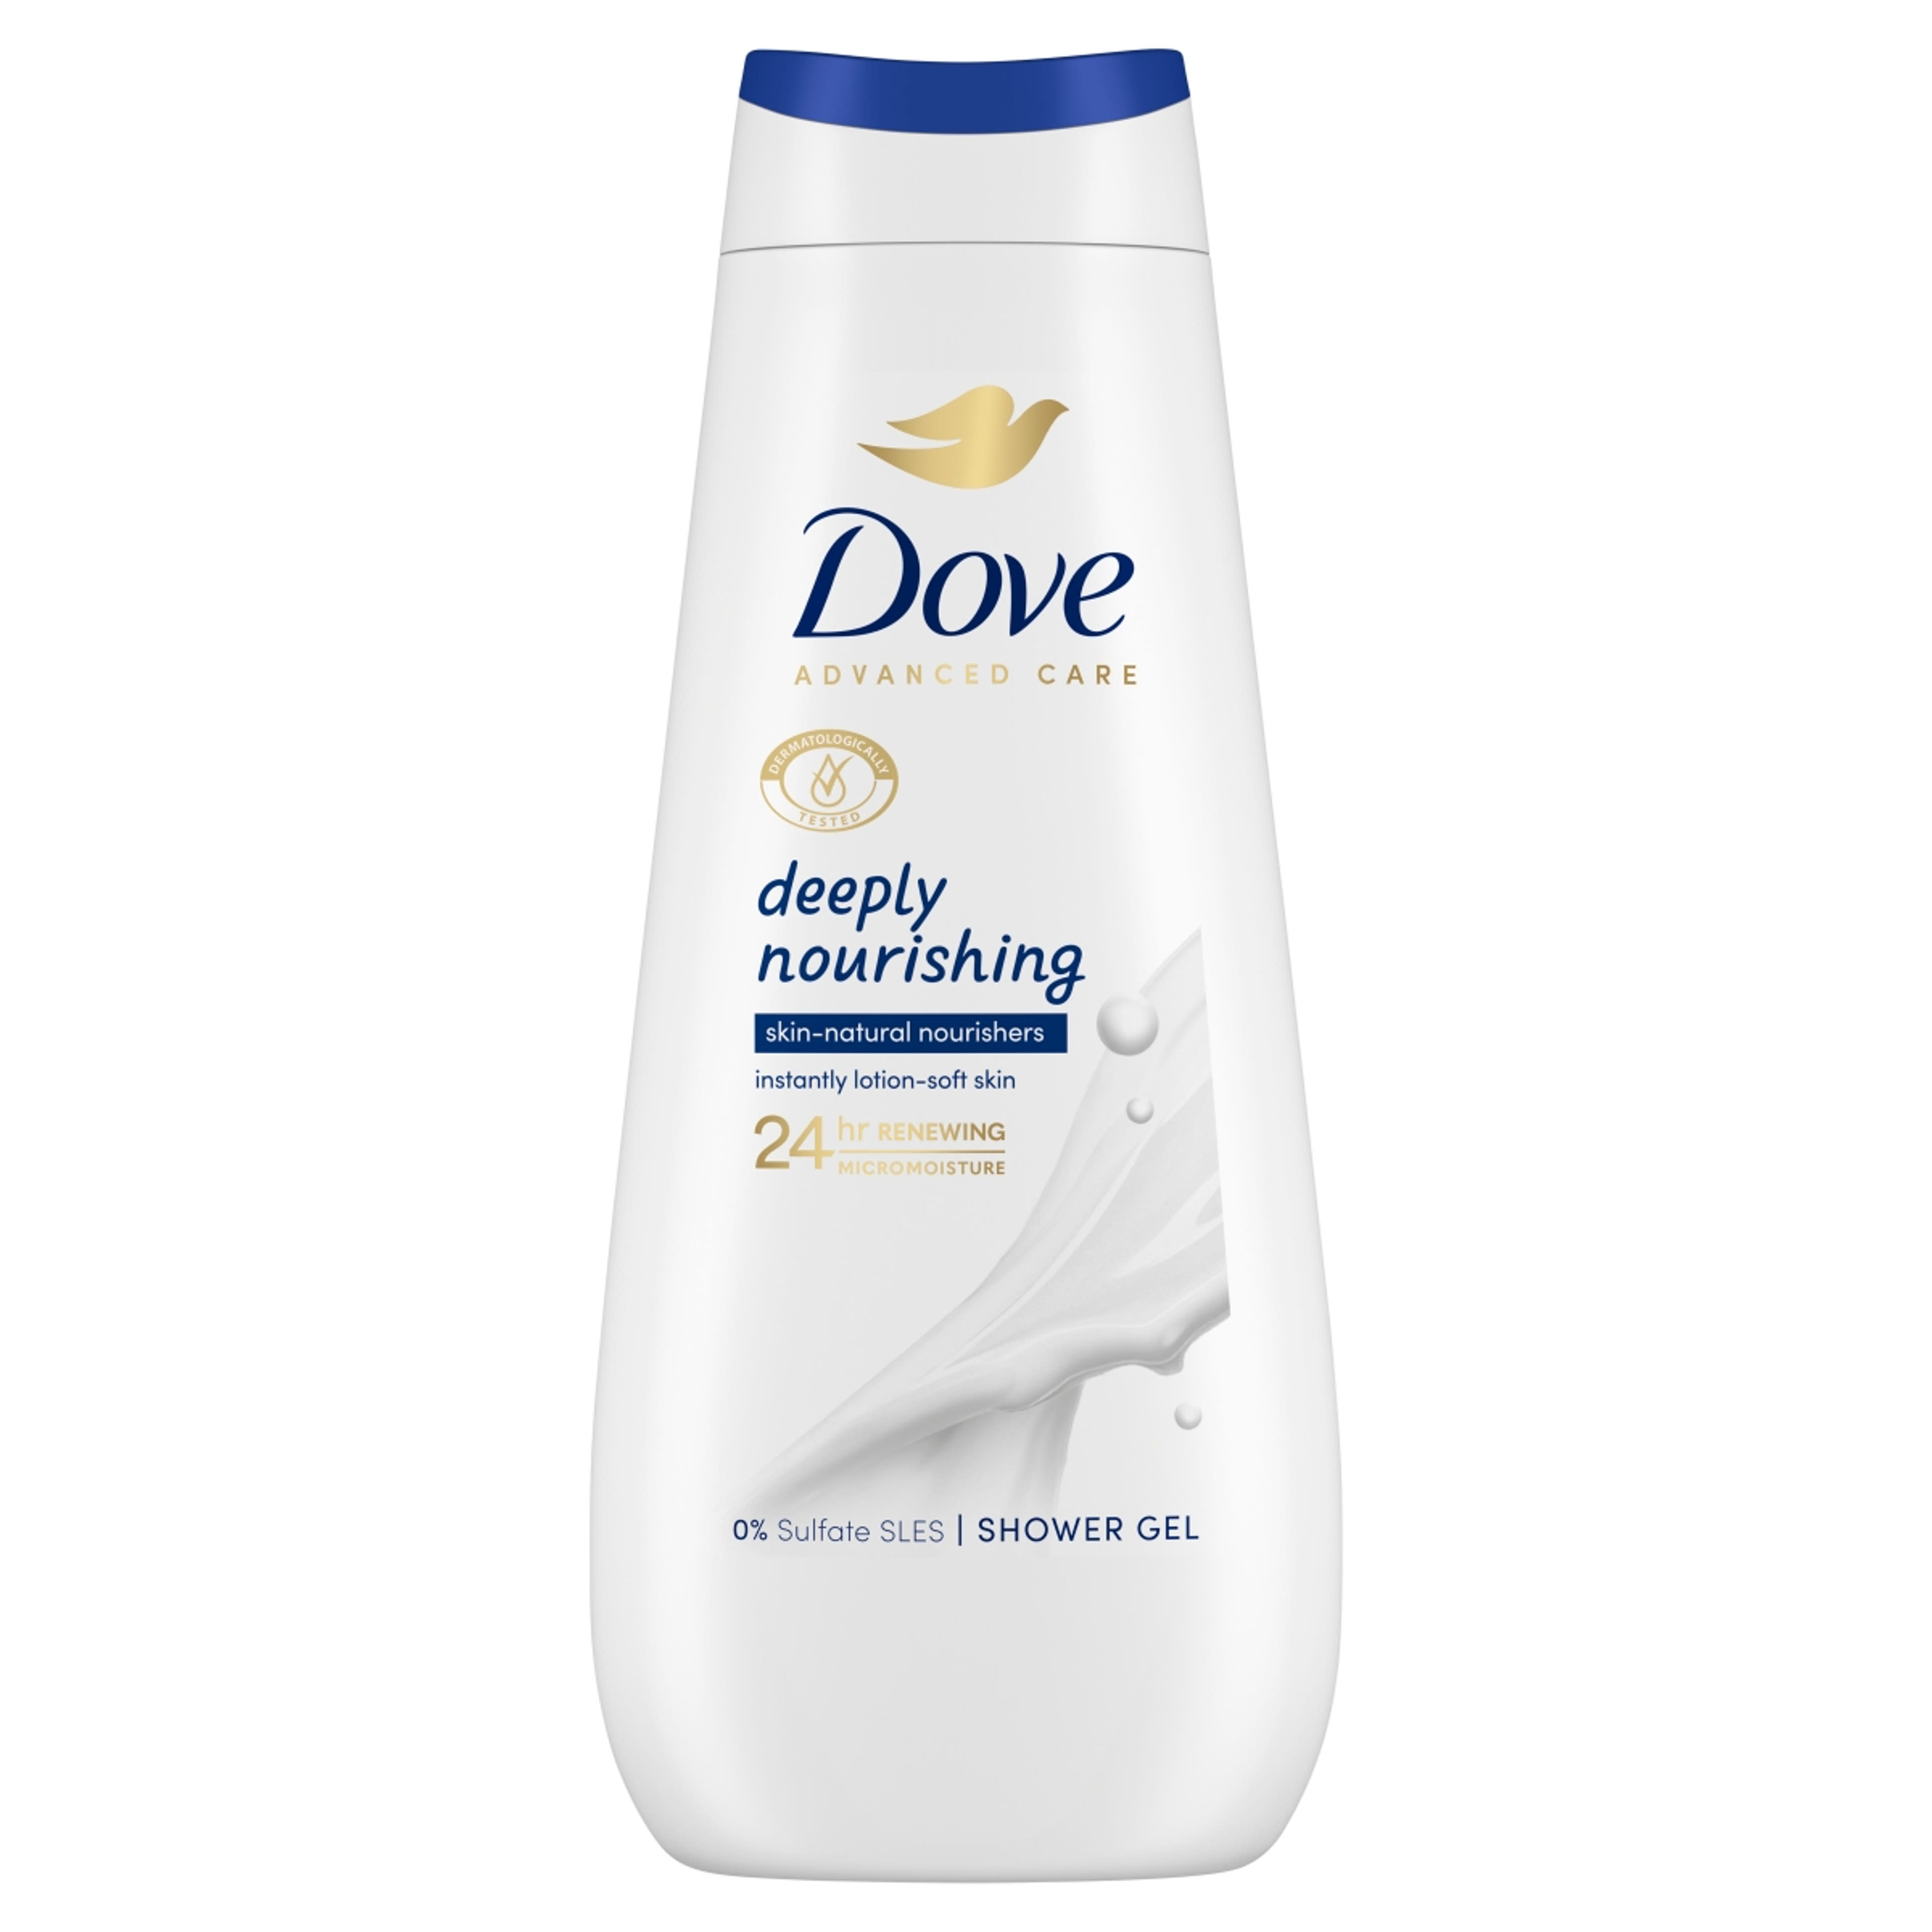 Dove Advanced Care Deeply Nourishing krémtusfürdő - 400 ml